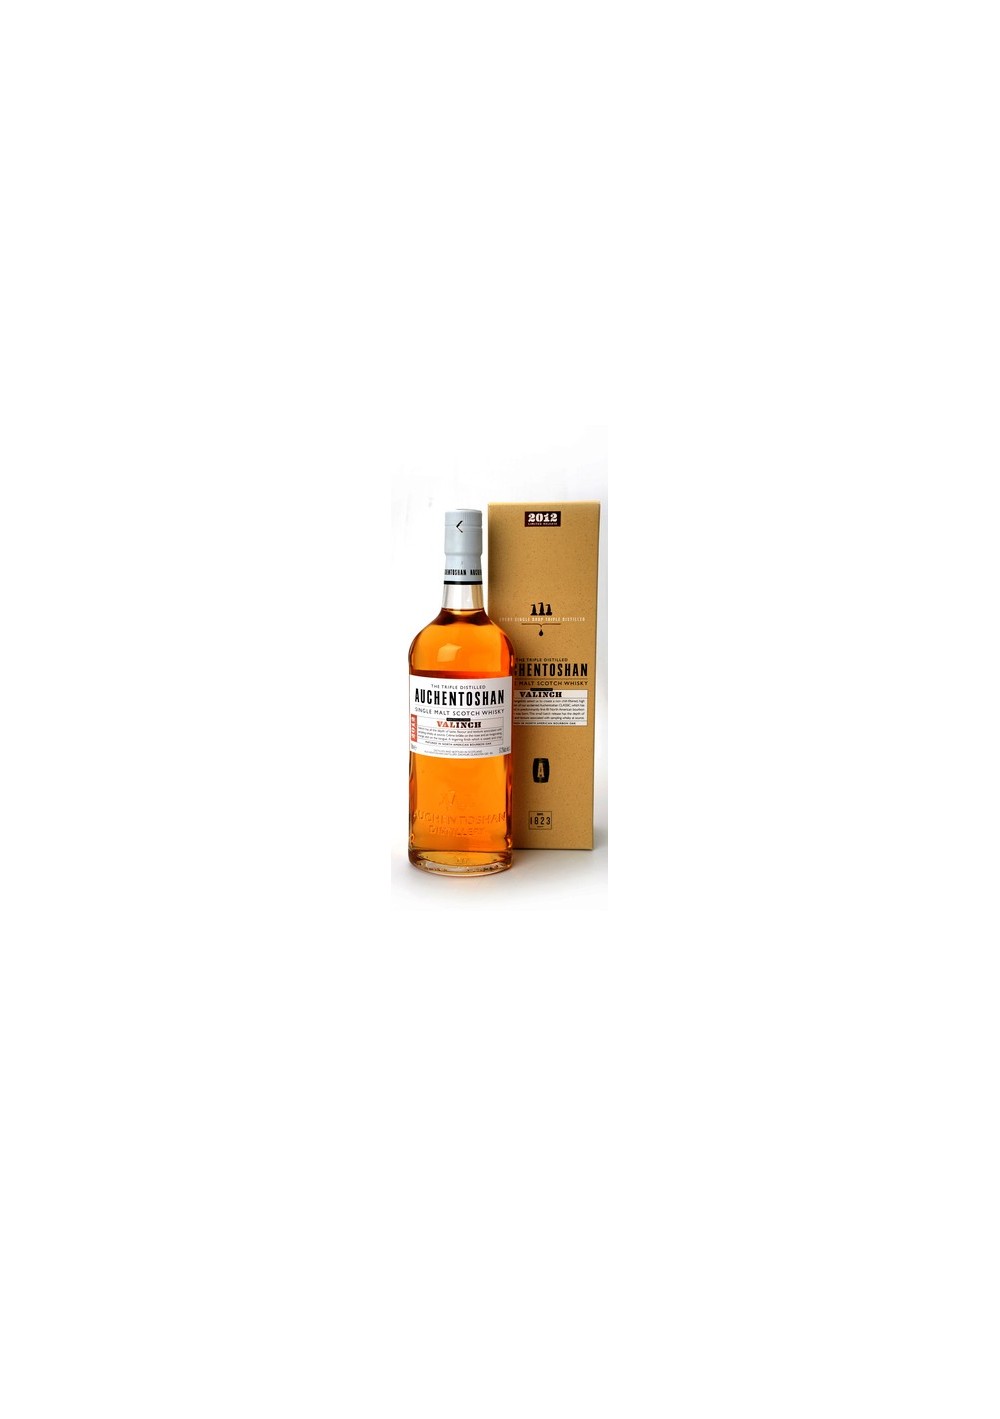 Auchentoshan Whisky Valinch Edition 2012